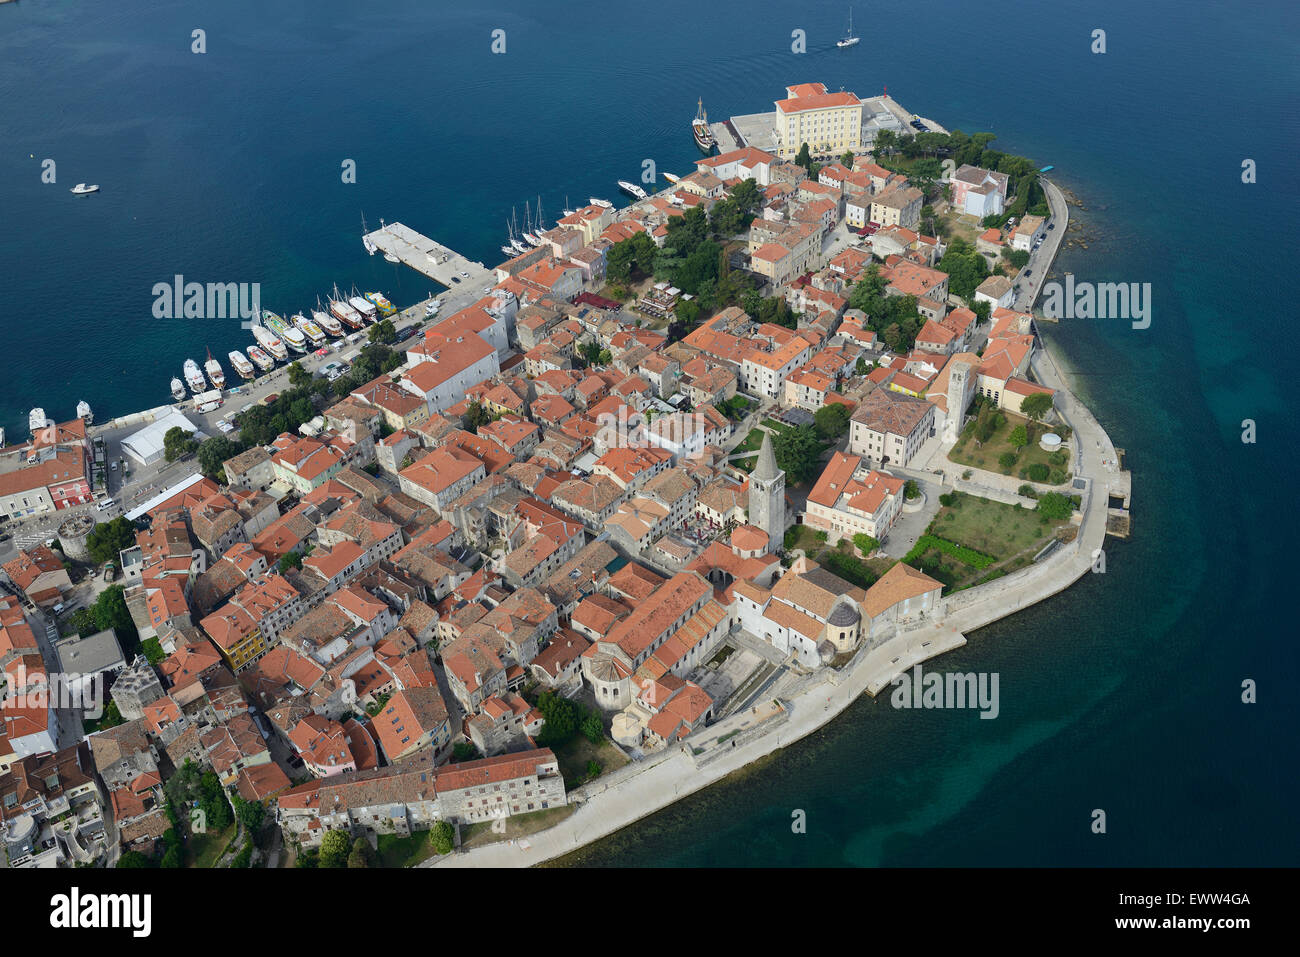 AERIAL VIEW. medieval town on a peninsula on the Adriatic shores. Porec (also known as Parenzo, its Italian name), Istria, Croatia. Stock Photo